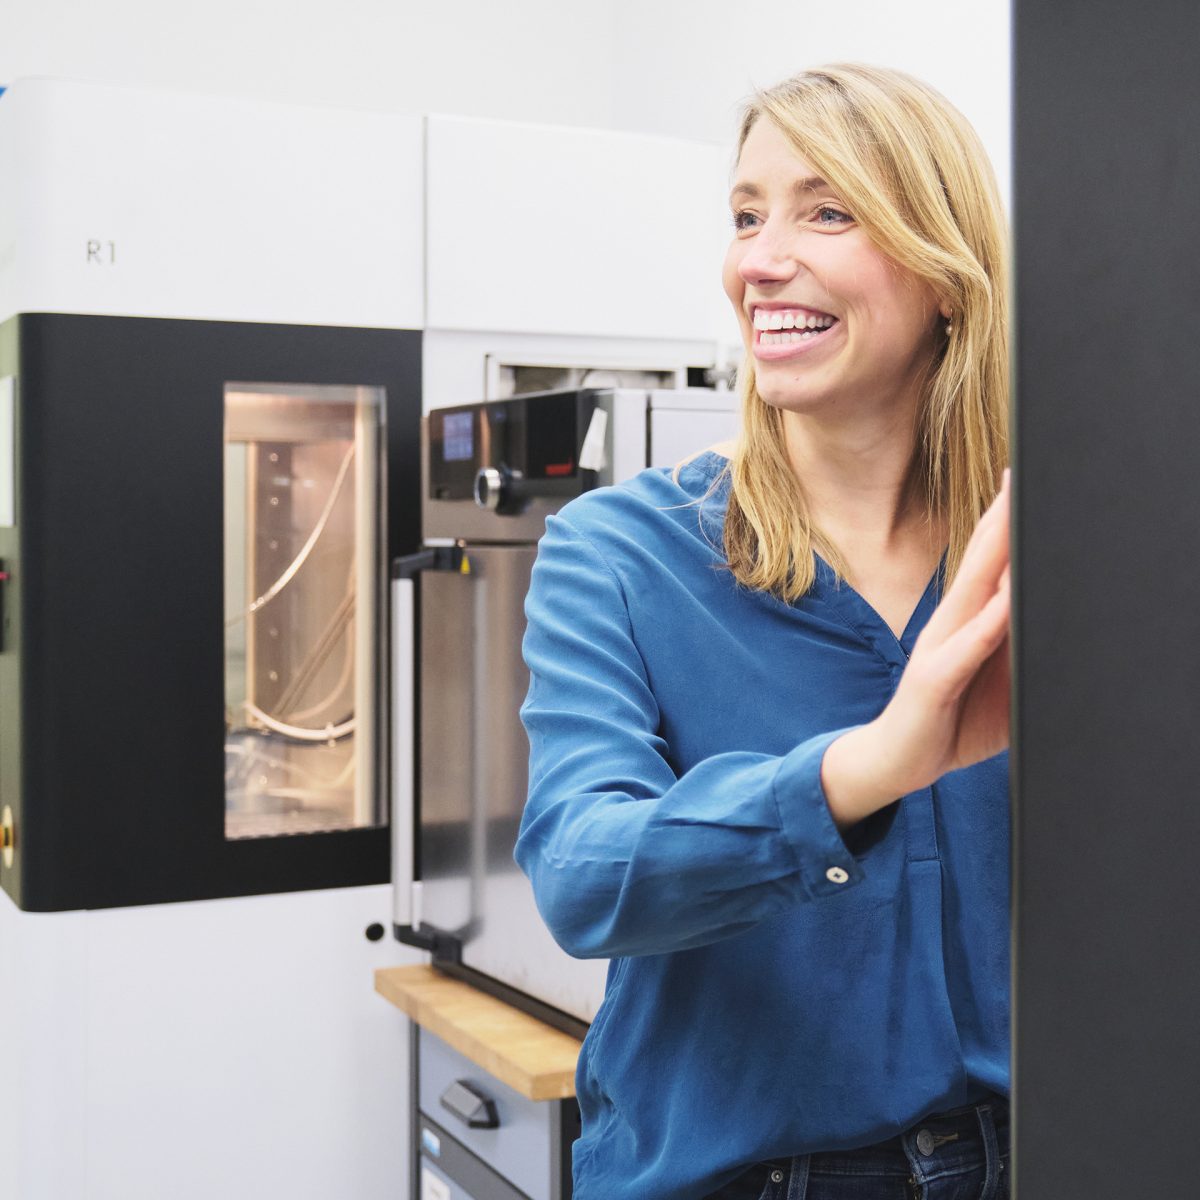 Miriam Haerst in front of the 3D printer she developed.